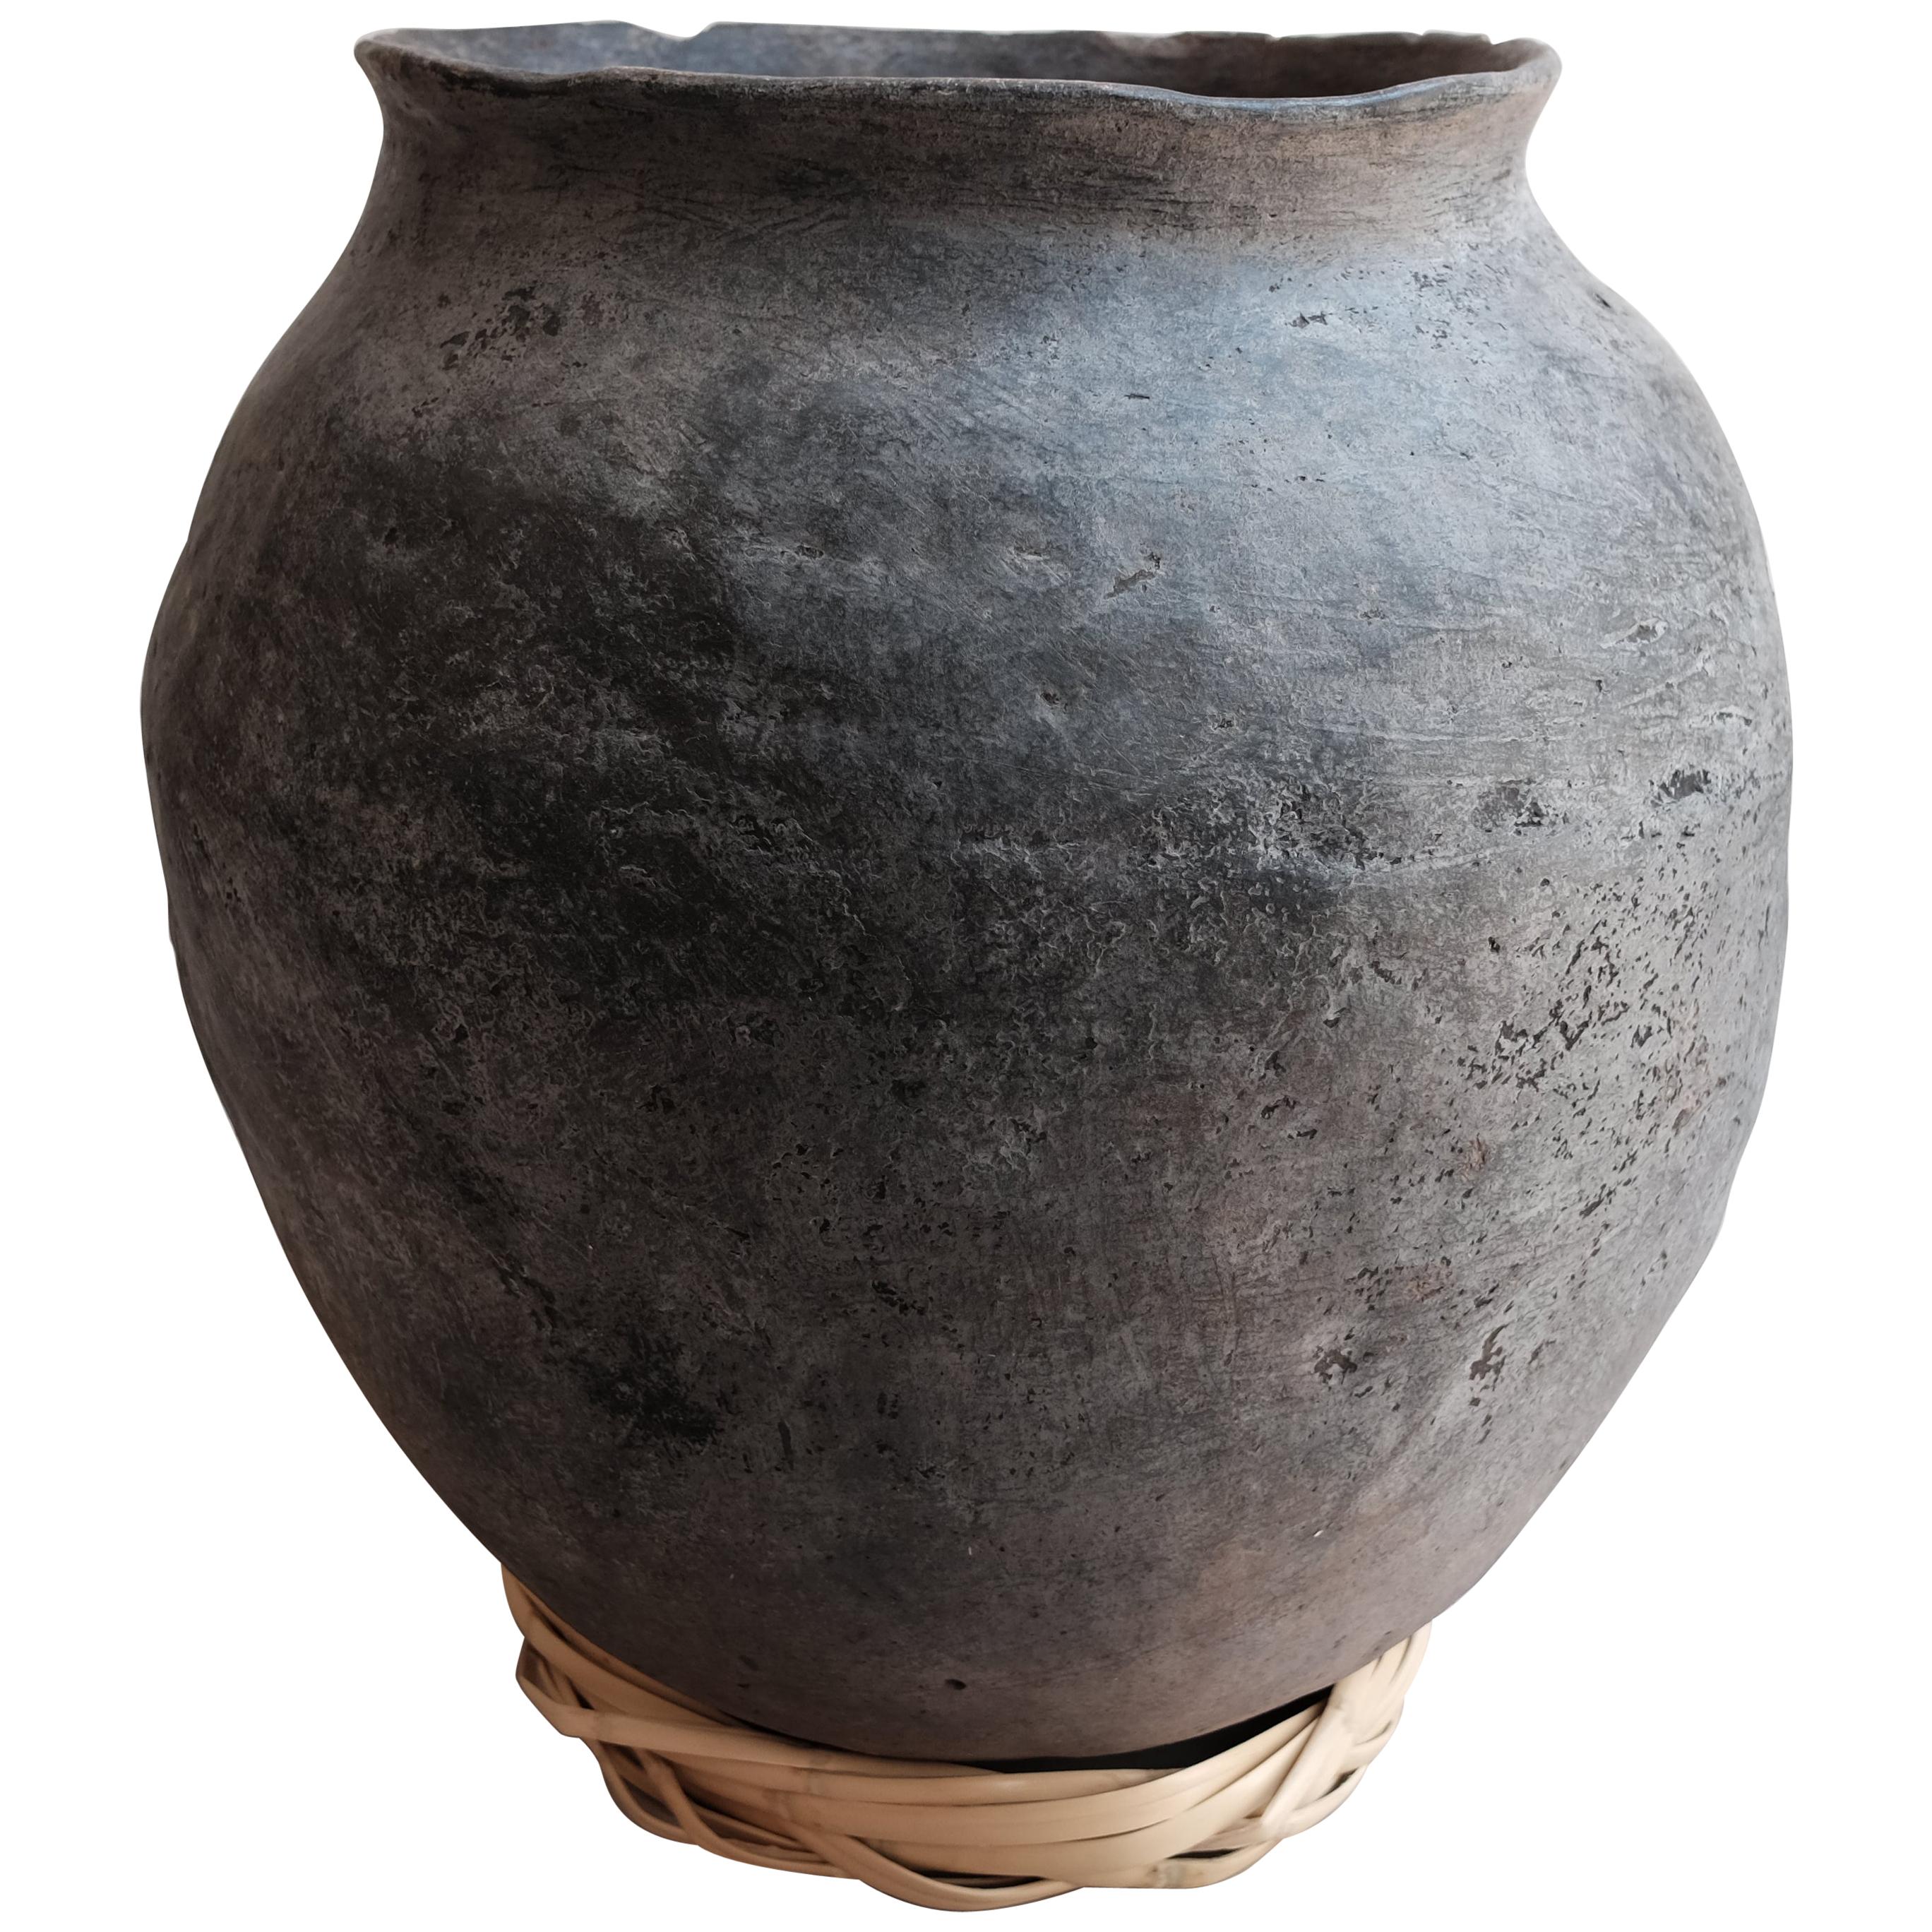 Primitive Styled Pot from Oaxaca